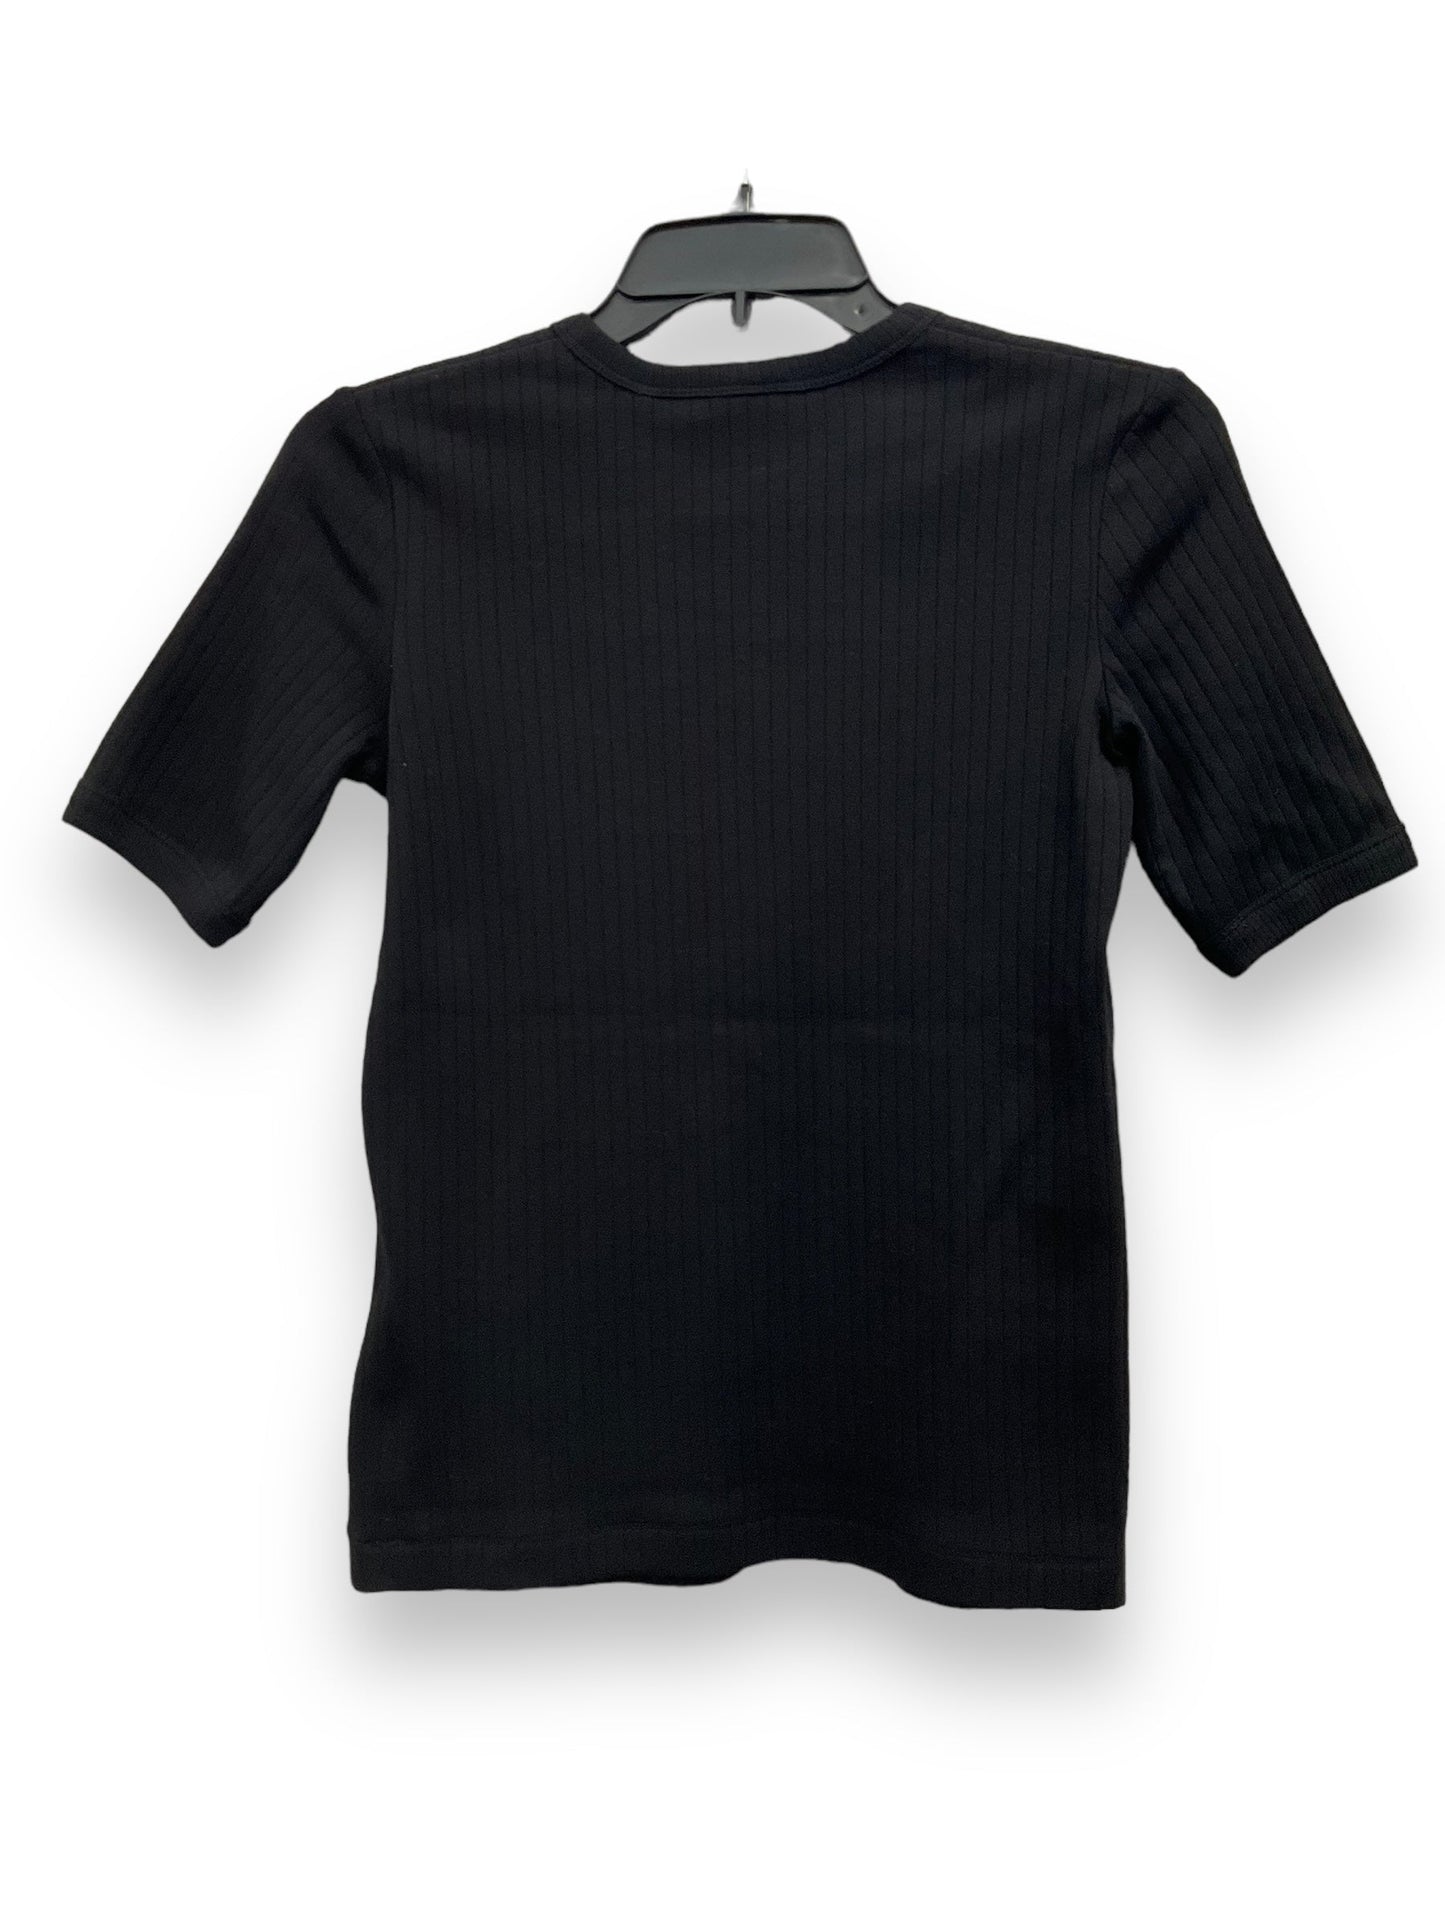 Black Top Short Sleeve Helmut Lang, Size S